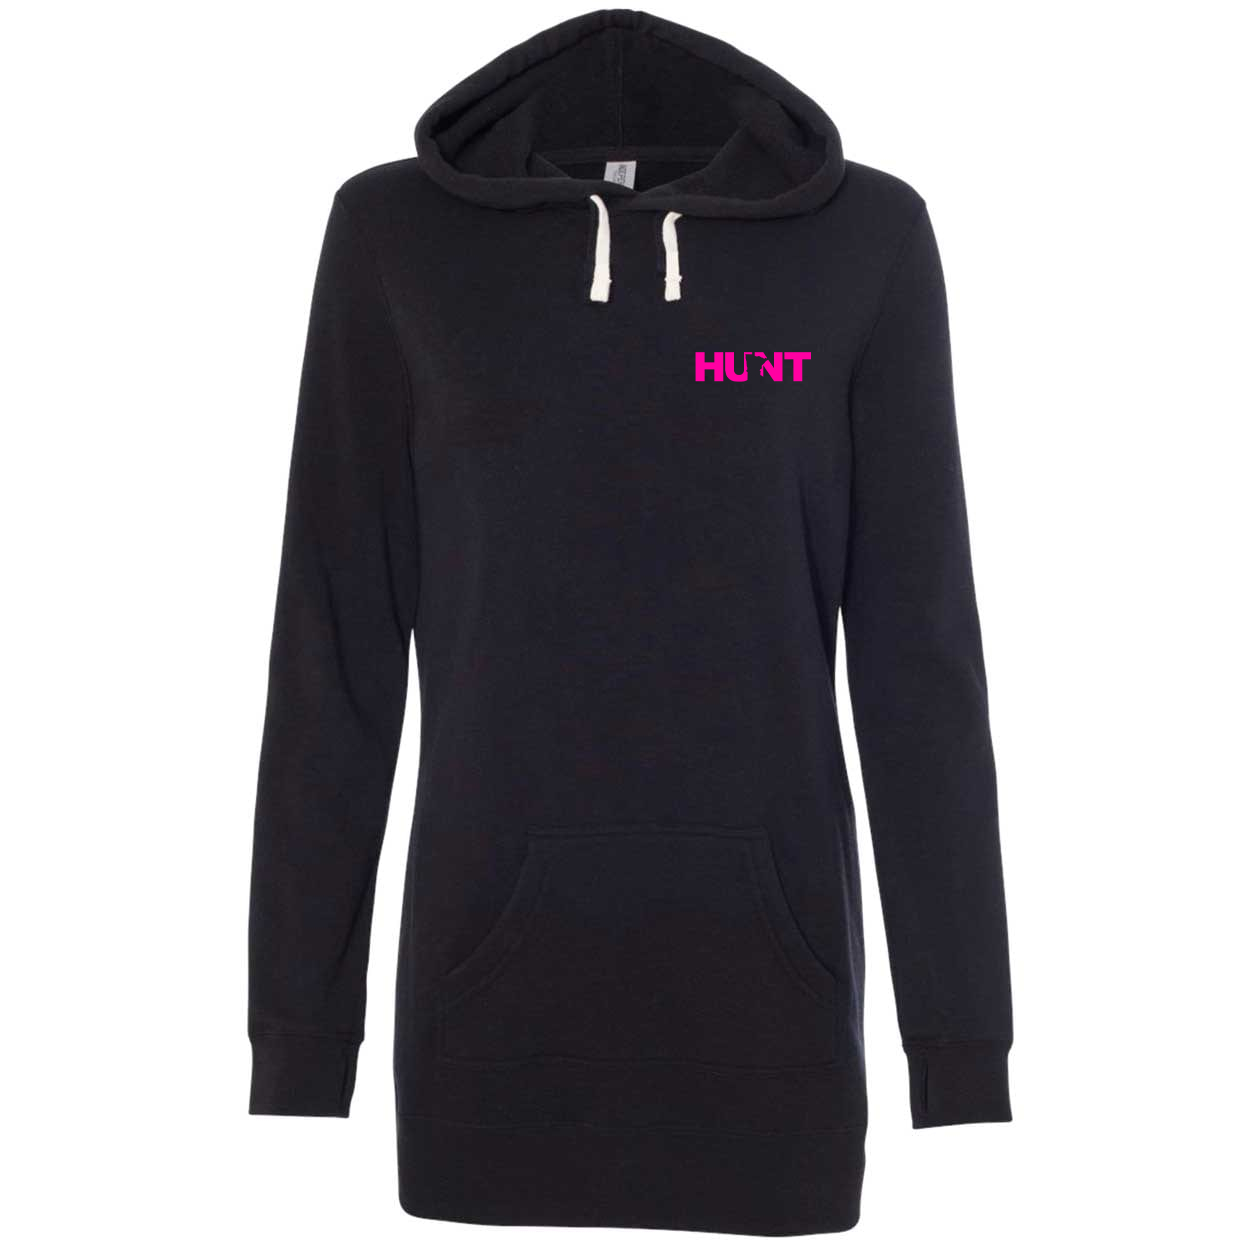 Hunt Minnesota Night Out Womens Pullover Hooded Sweatshirt Dress Black (Pink Logo)